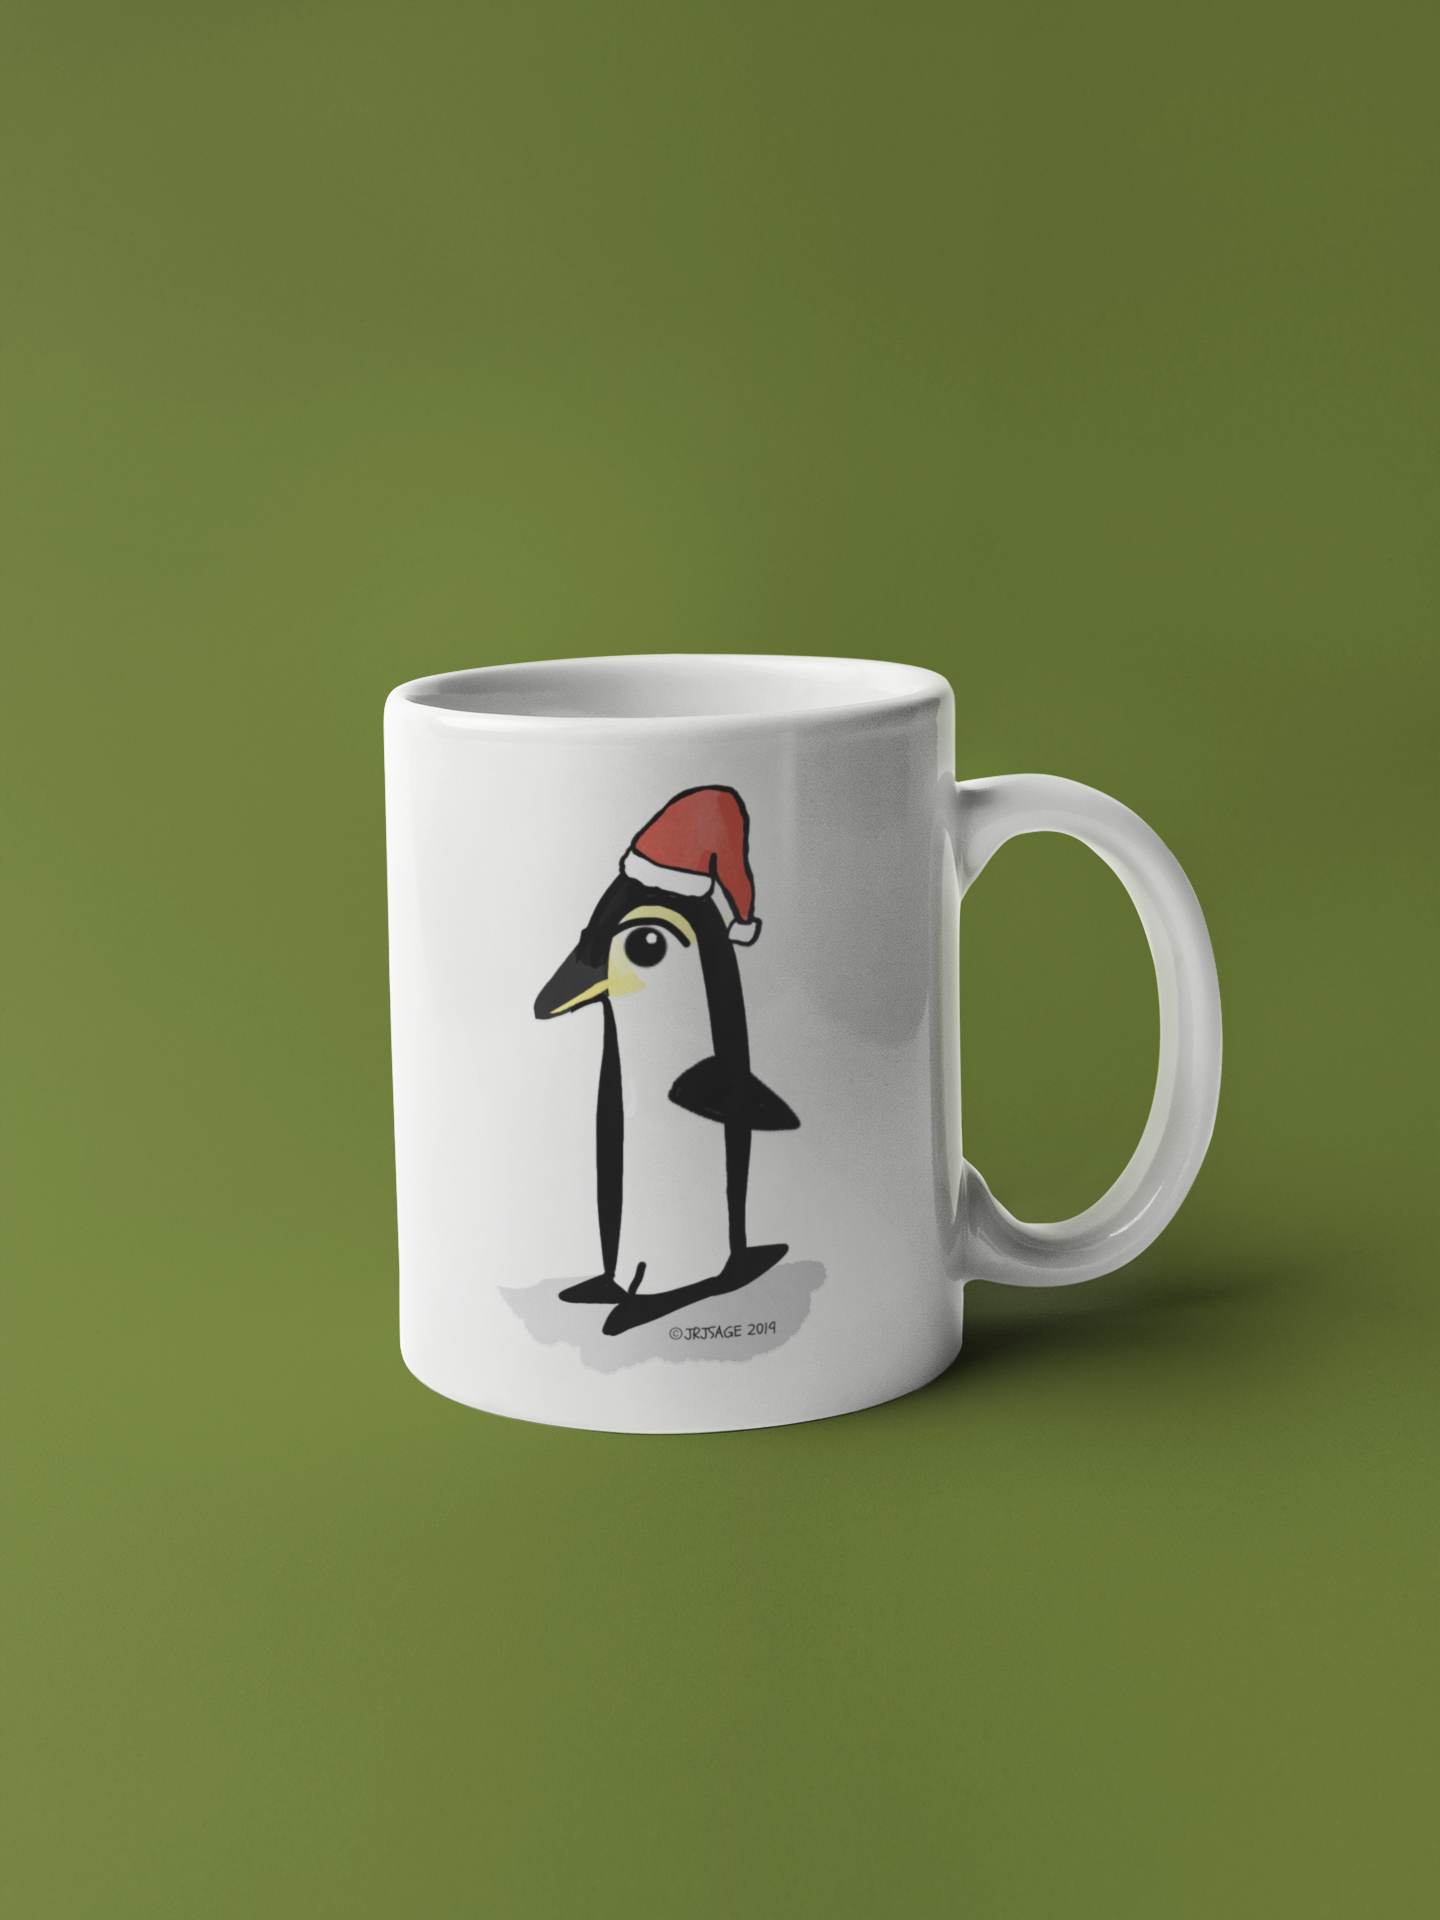 Santa Penguin Christmas coffee mug design by Hector and Bone cute animal wearing Xmas hat